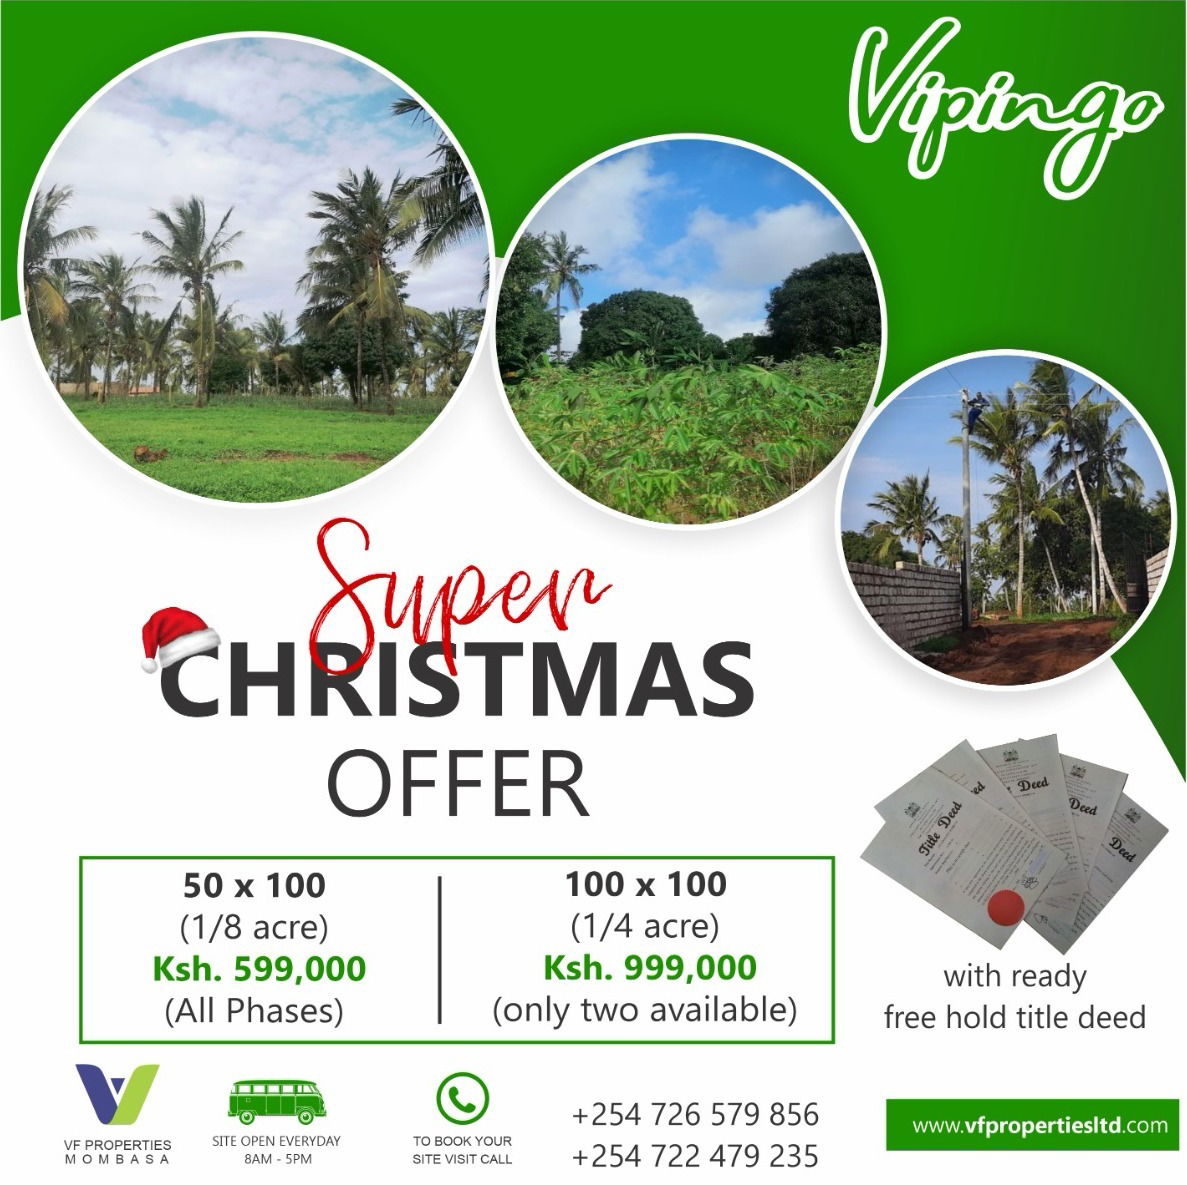 Christmas Offer.. 50*100 plots at Ksh. 599,000 & 100*100 plots at Ksh. 999,000 - SOLD OUT